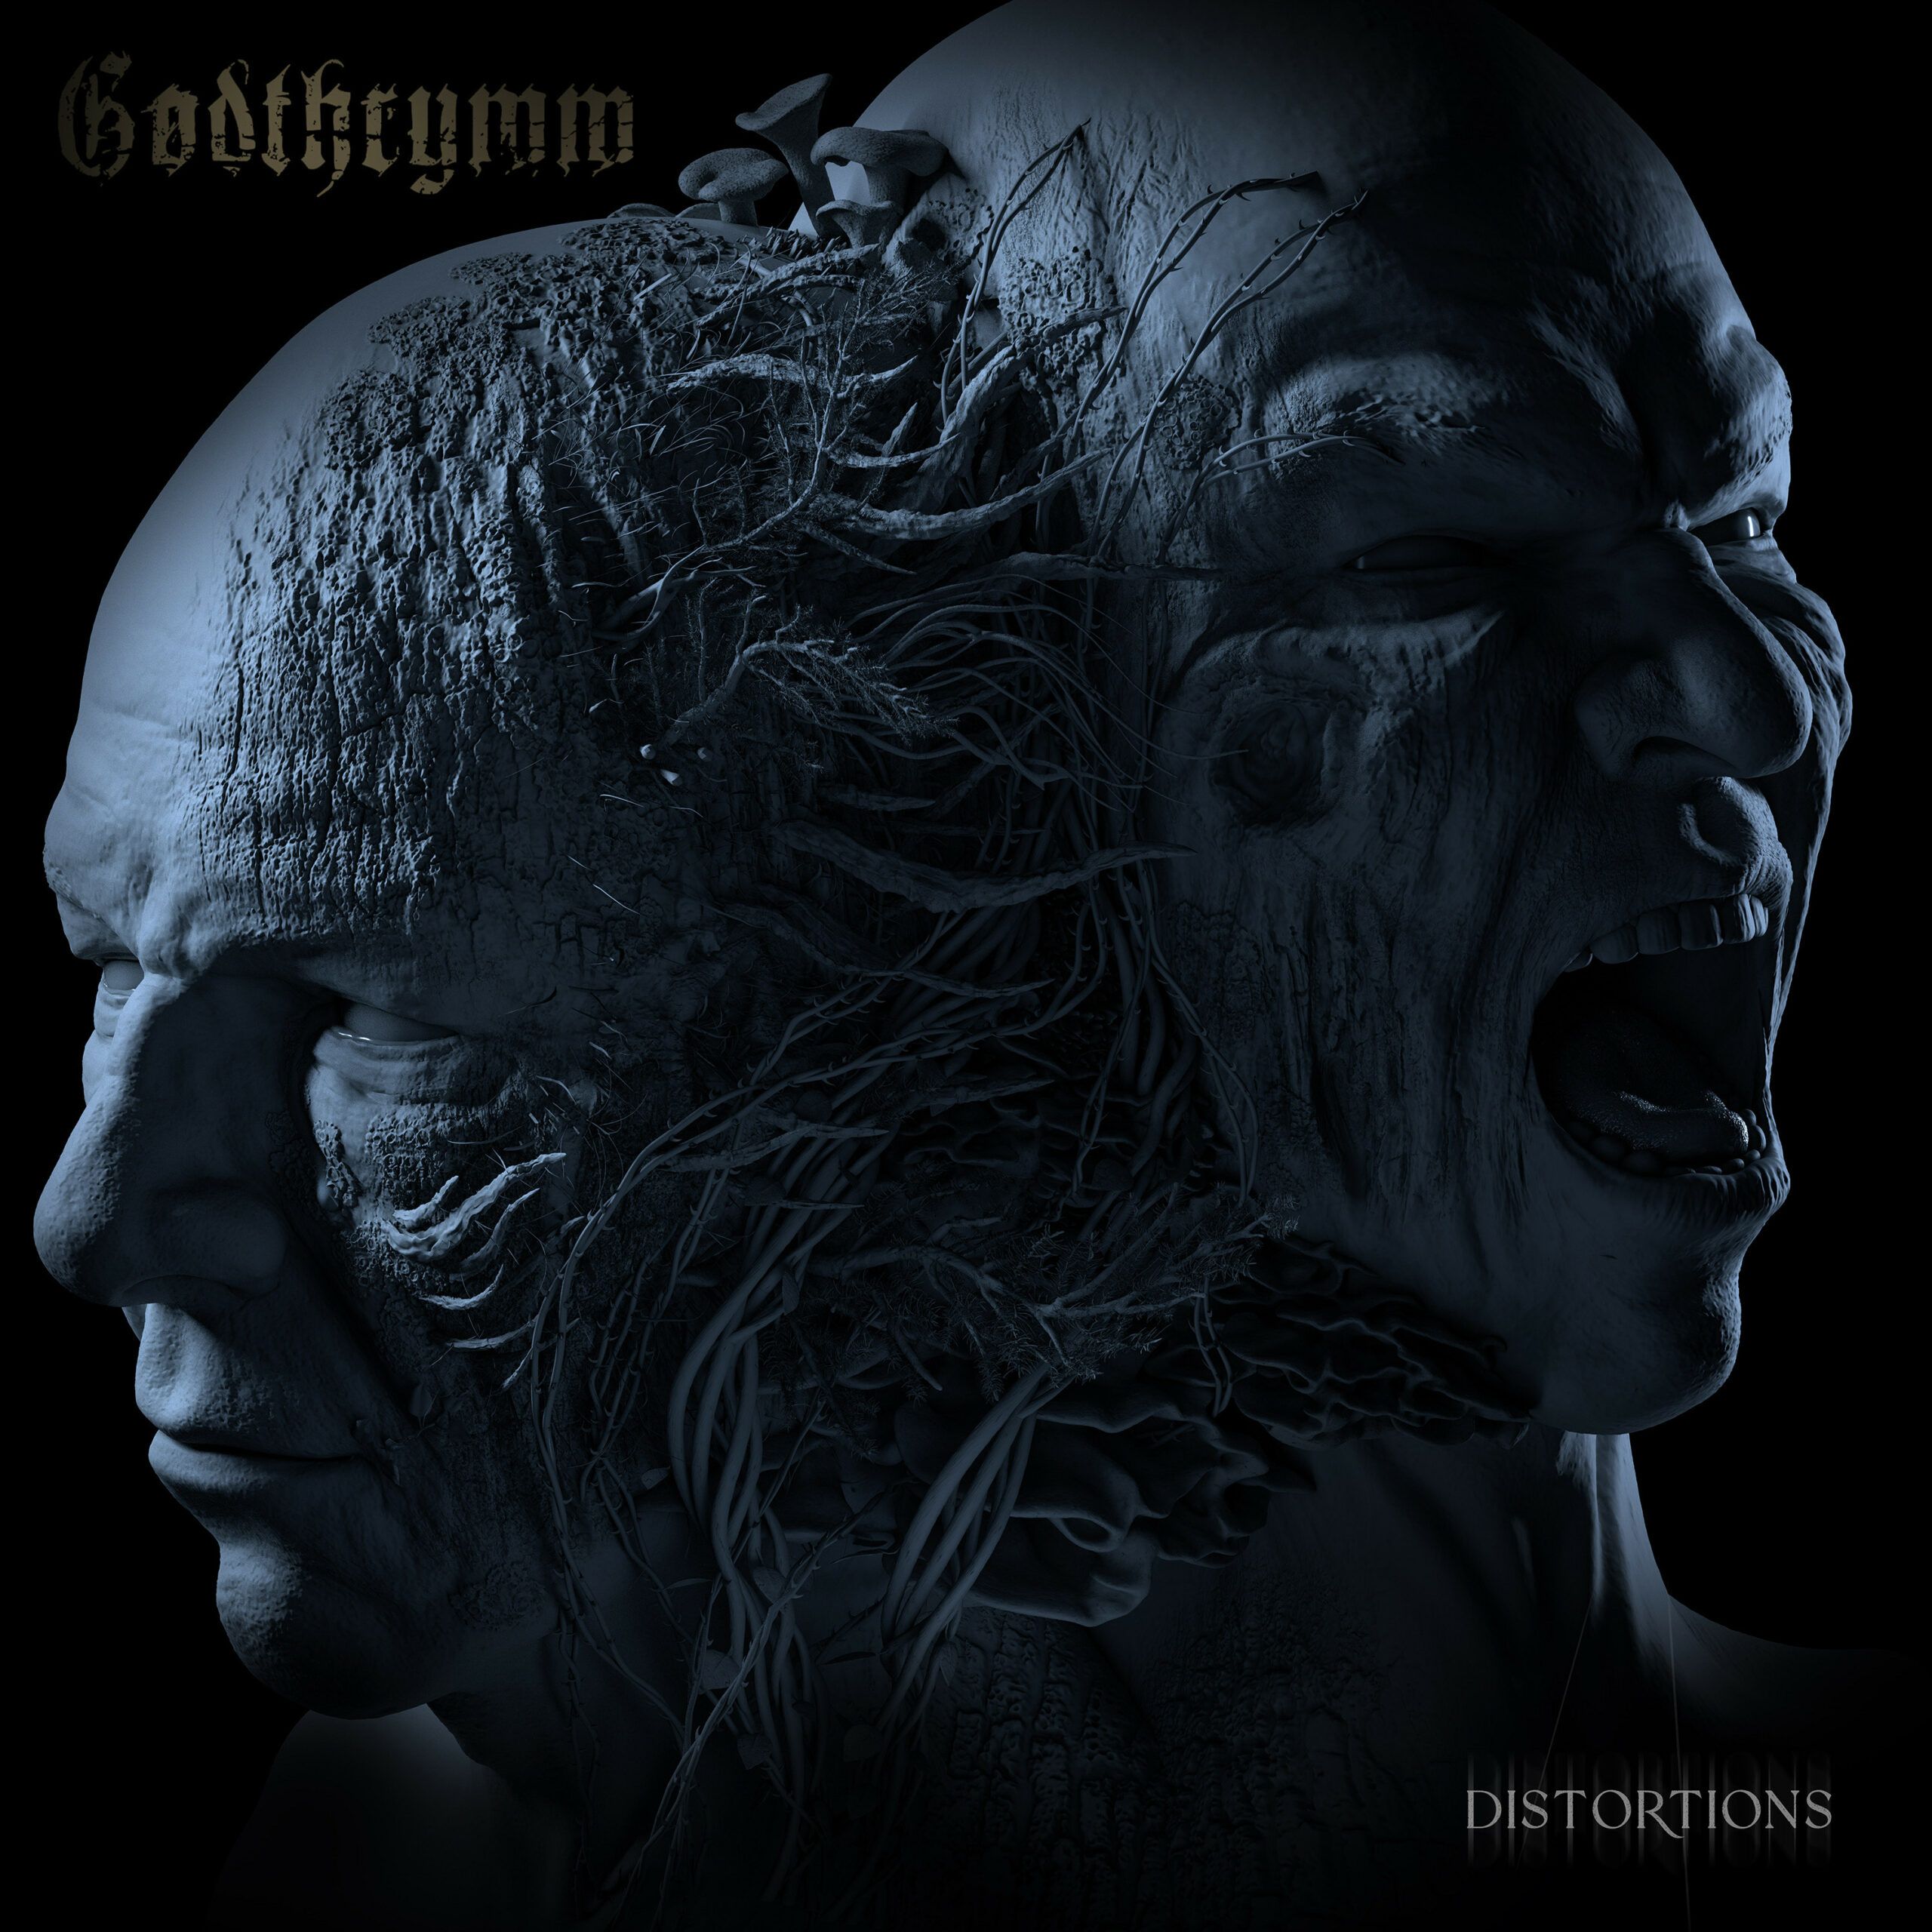 Godthrymm - "Distortions"